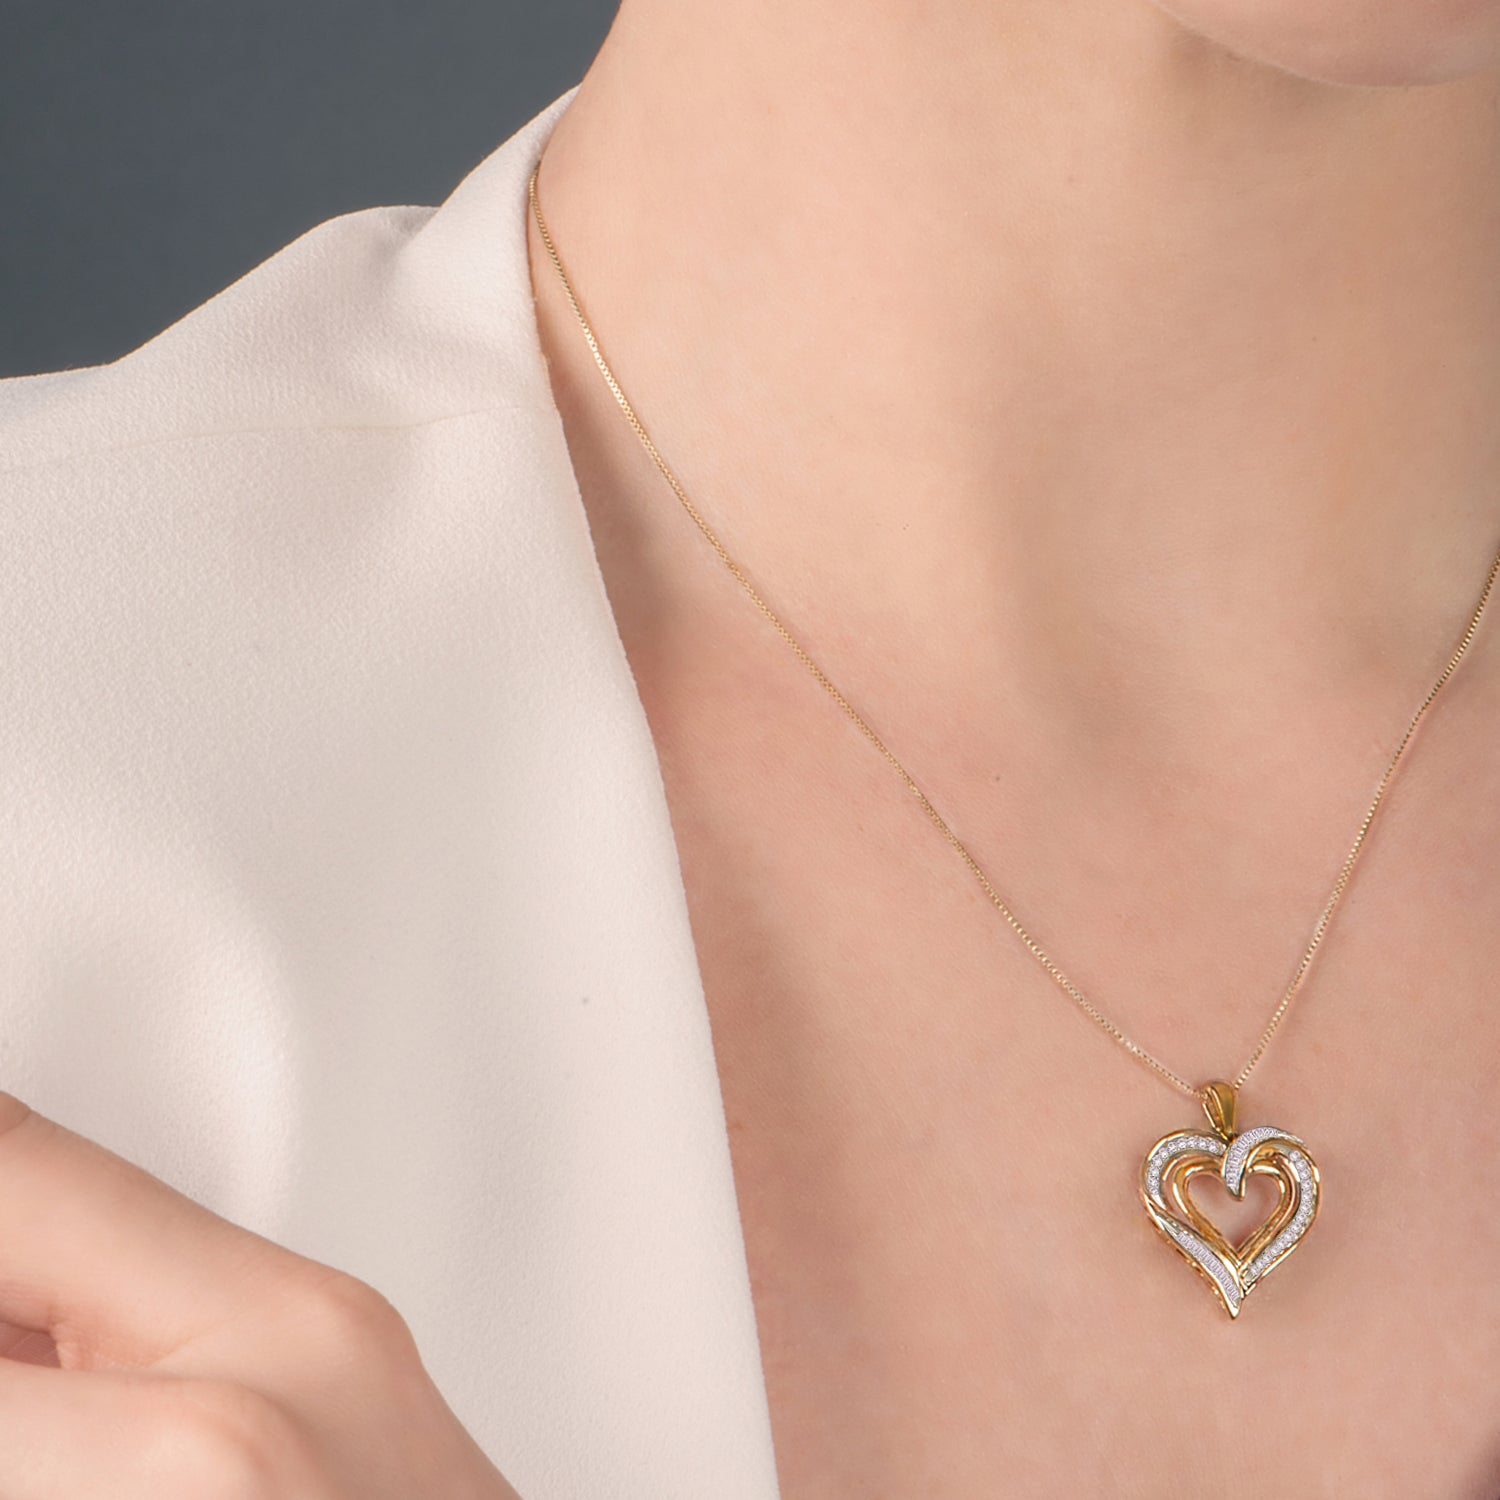 Diamond Heart Key Pendant Necklace | Sterling Silver | White | Size 18 | I Am Loved